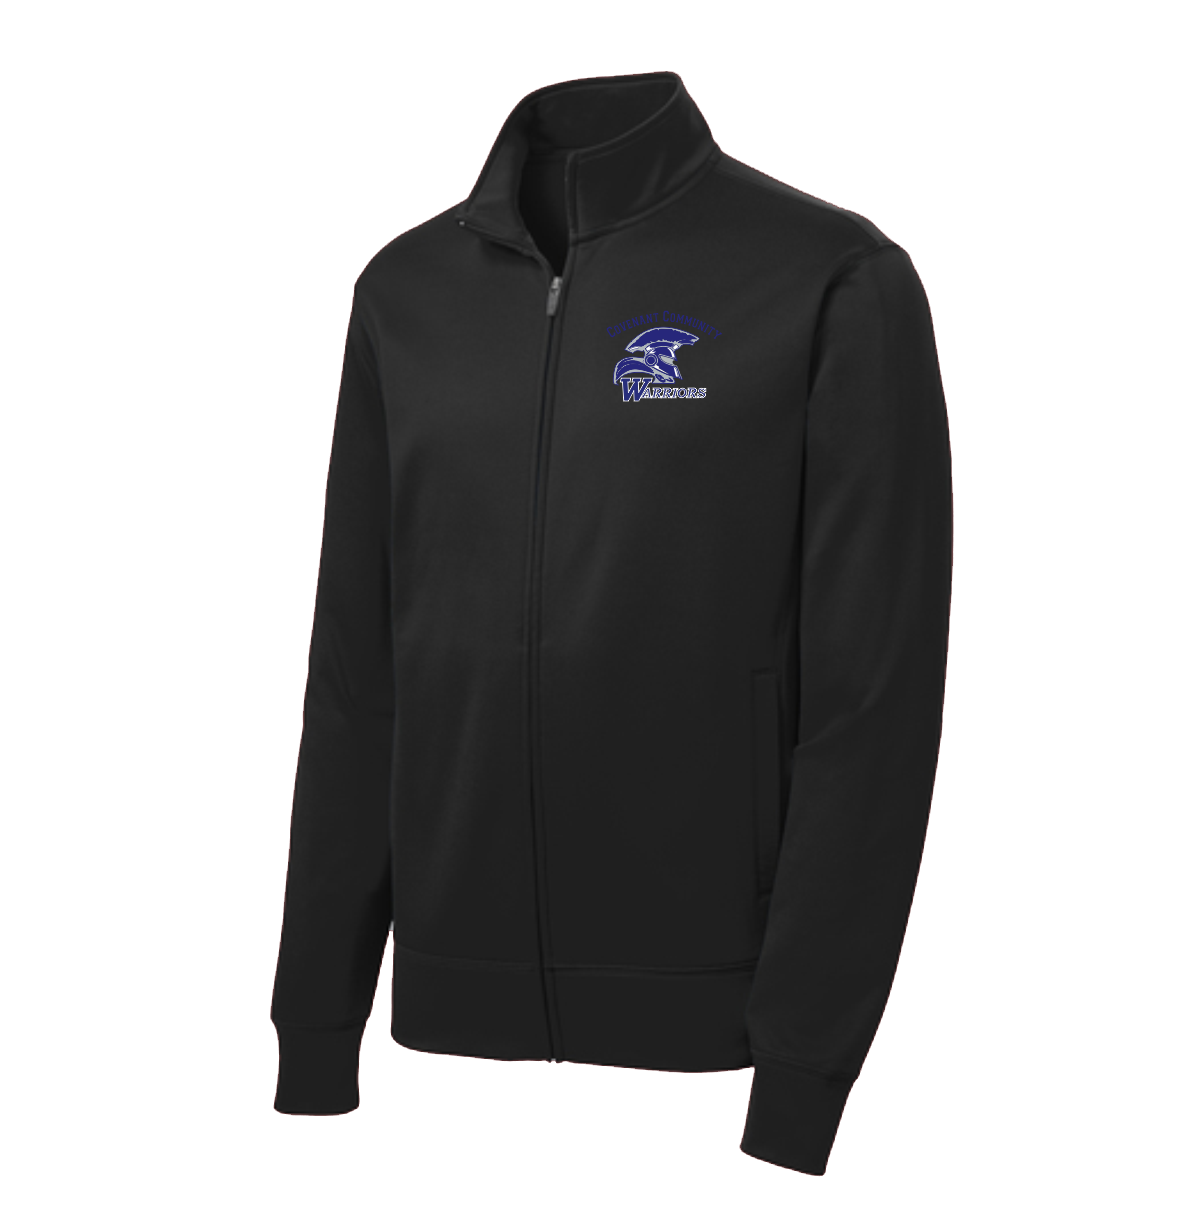 Covenant Community Warrior’s Zip Jacket – The League Brand